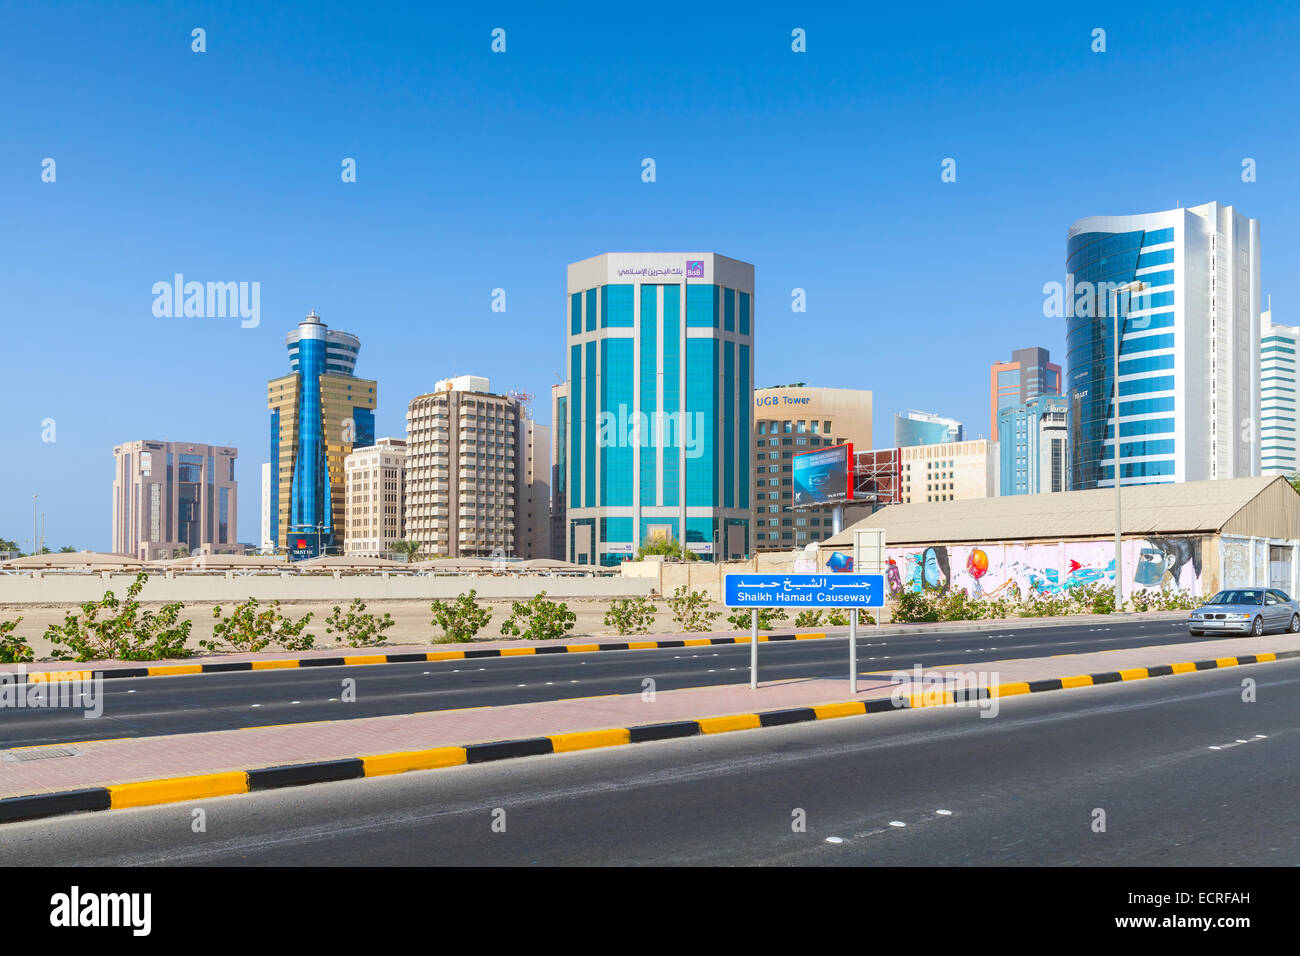 Manama, Bahrain - November 21, 2014: Shaikh Hamad Causeway. Street view of Manama city, Capital of Bahrain Stock Photo